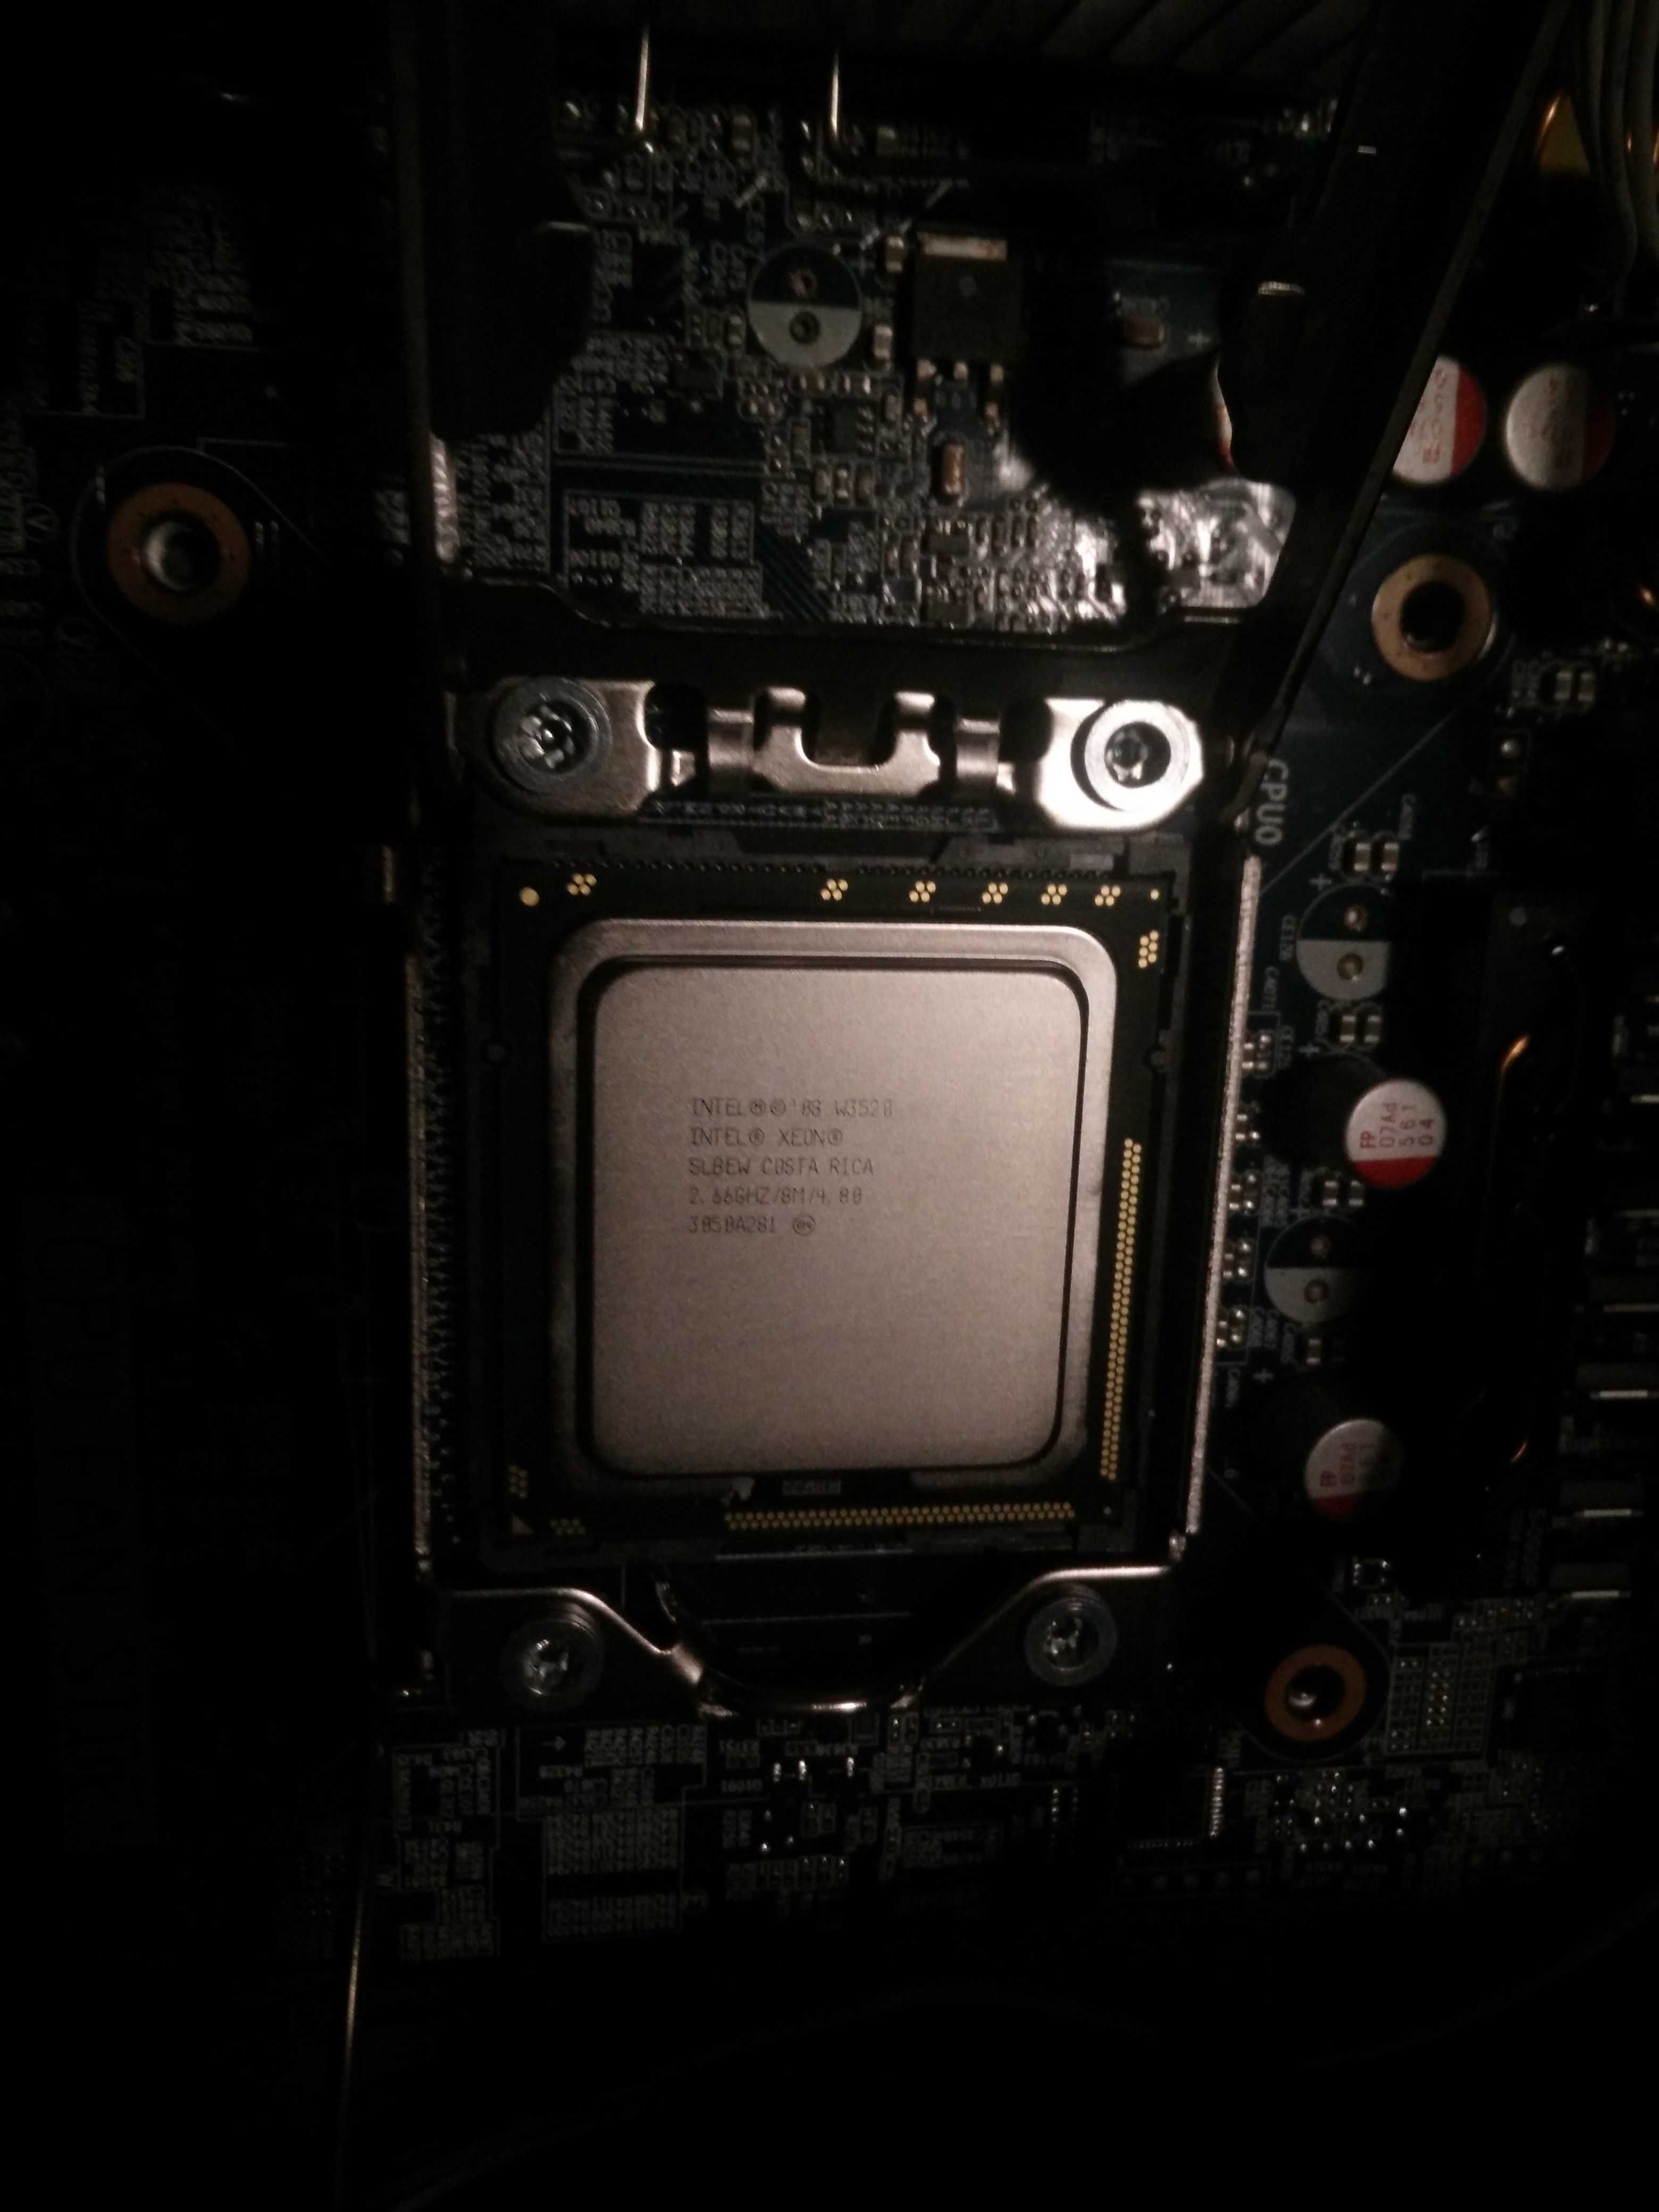 Procesor cpu Intel xeon w3520 quad 2.66-2.93 ghz